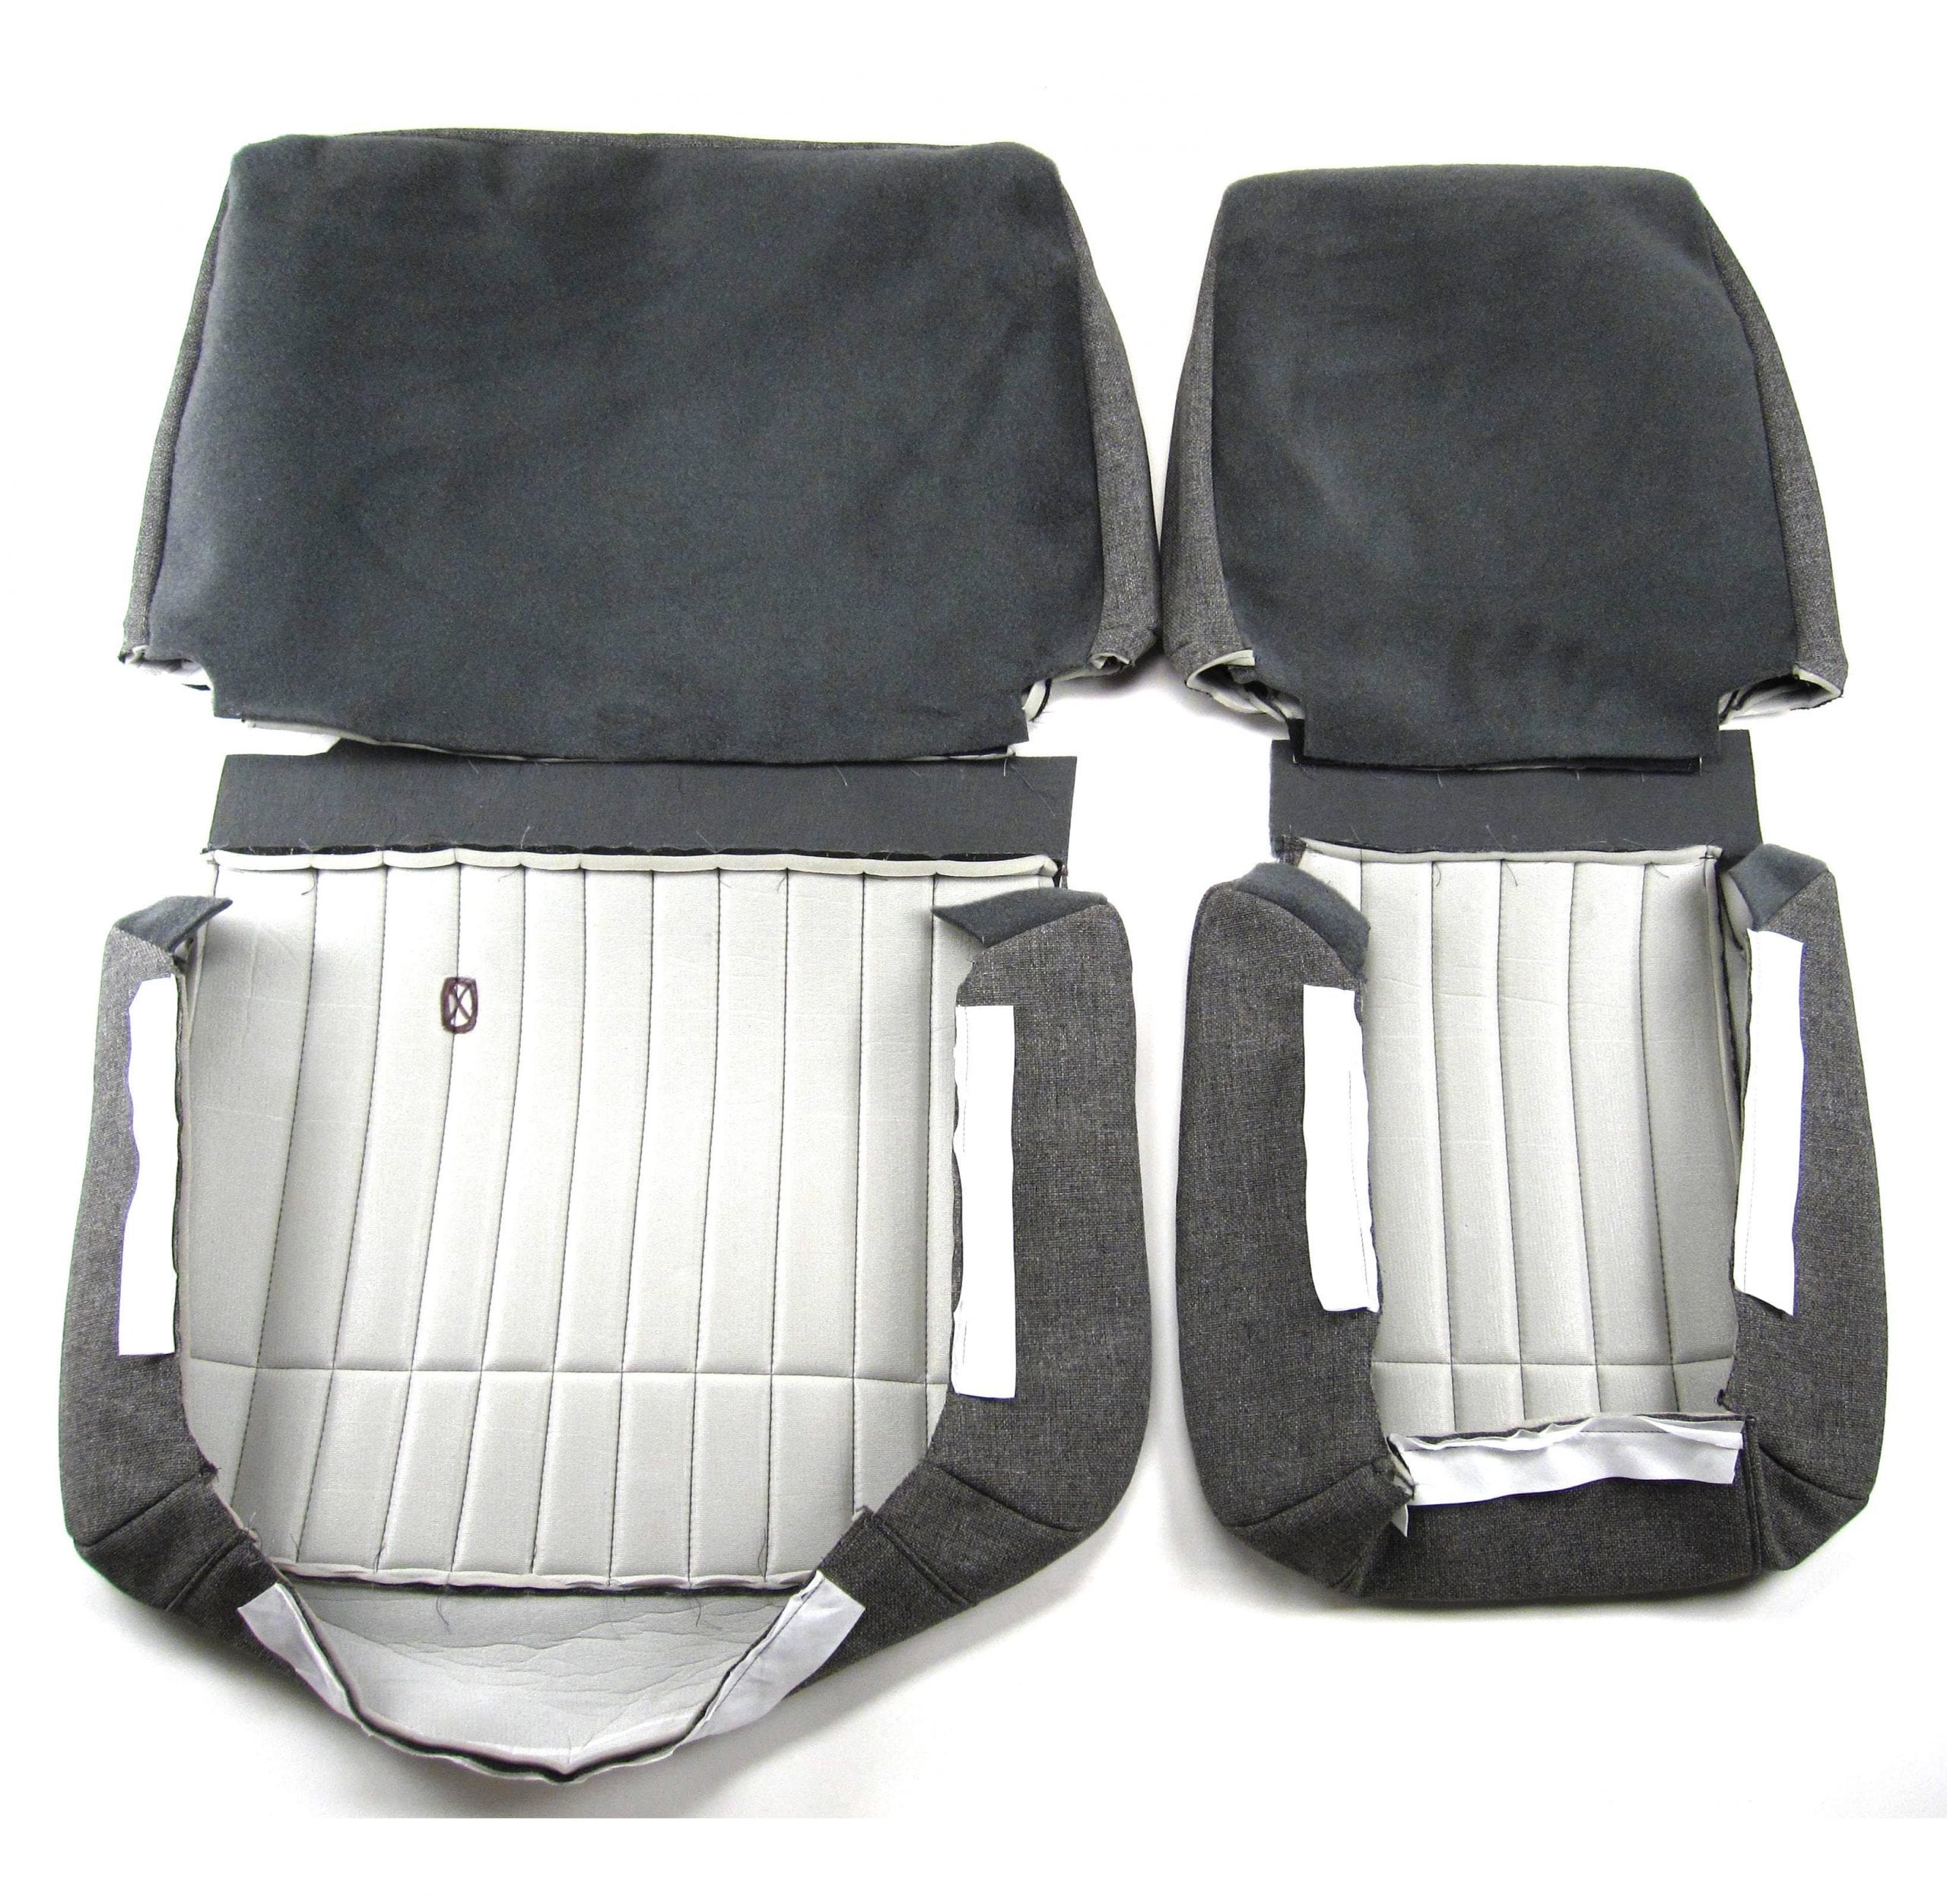 Car Seat Cover Kits